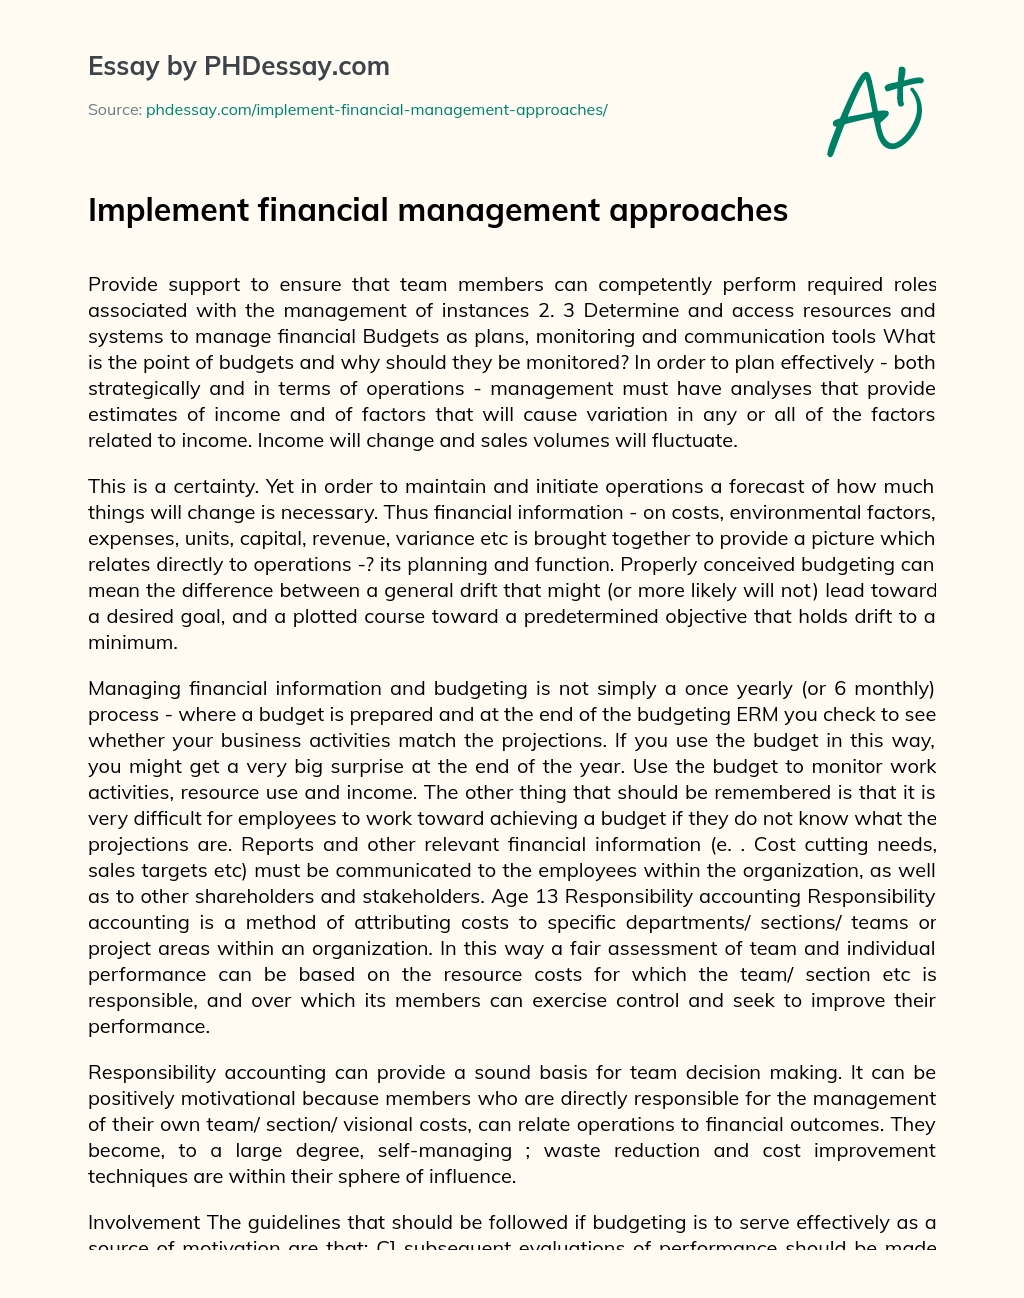 Implement financial management approaches essay